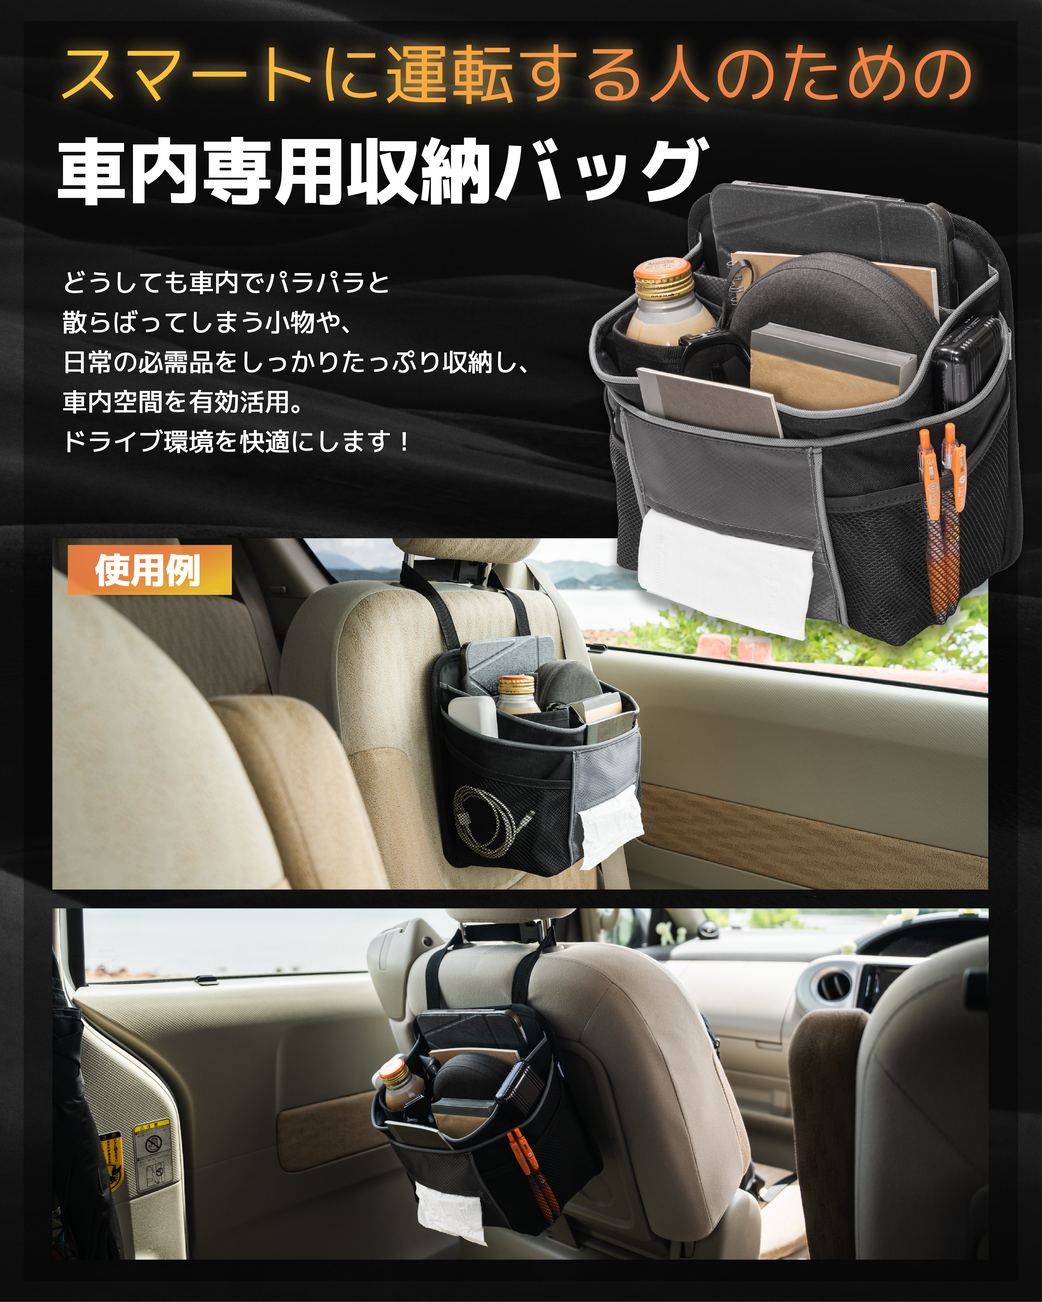 EZO Cabbie  車用 収納バッグ 【かゆい所に手が届くバッグで車内を整理整頓】